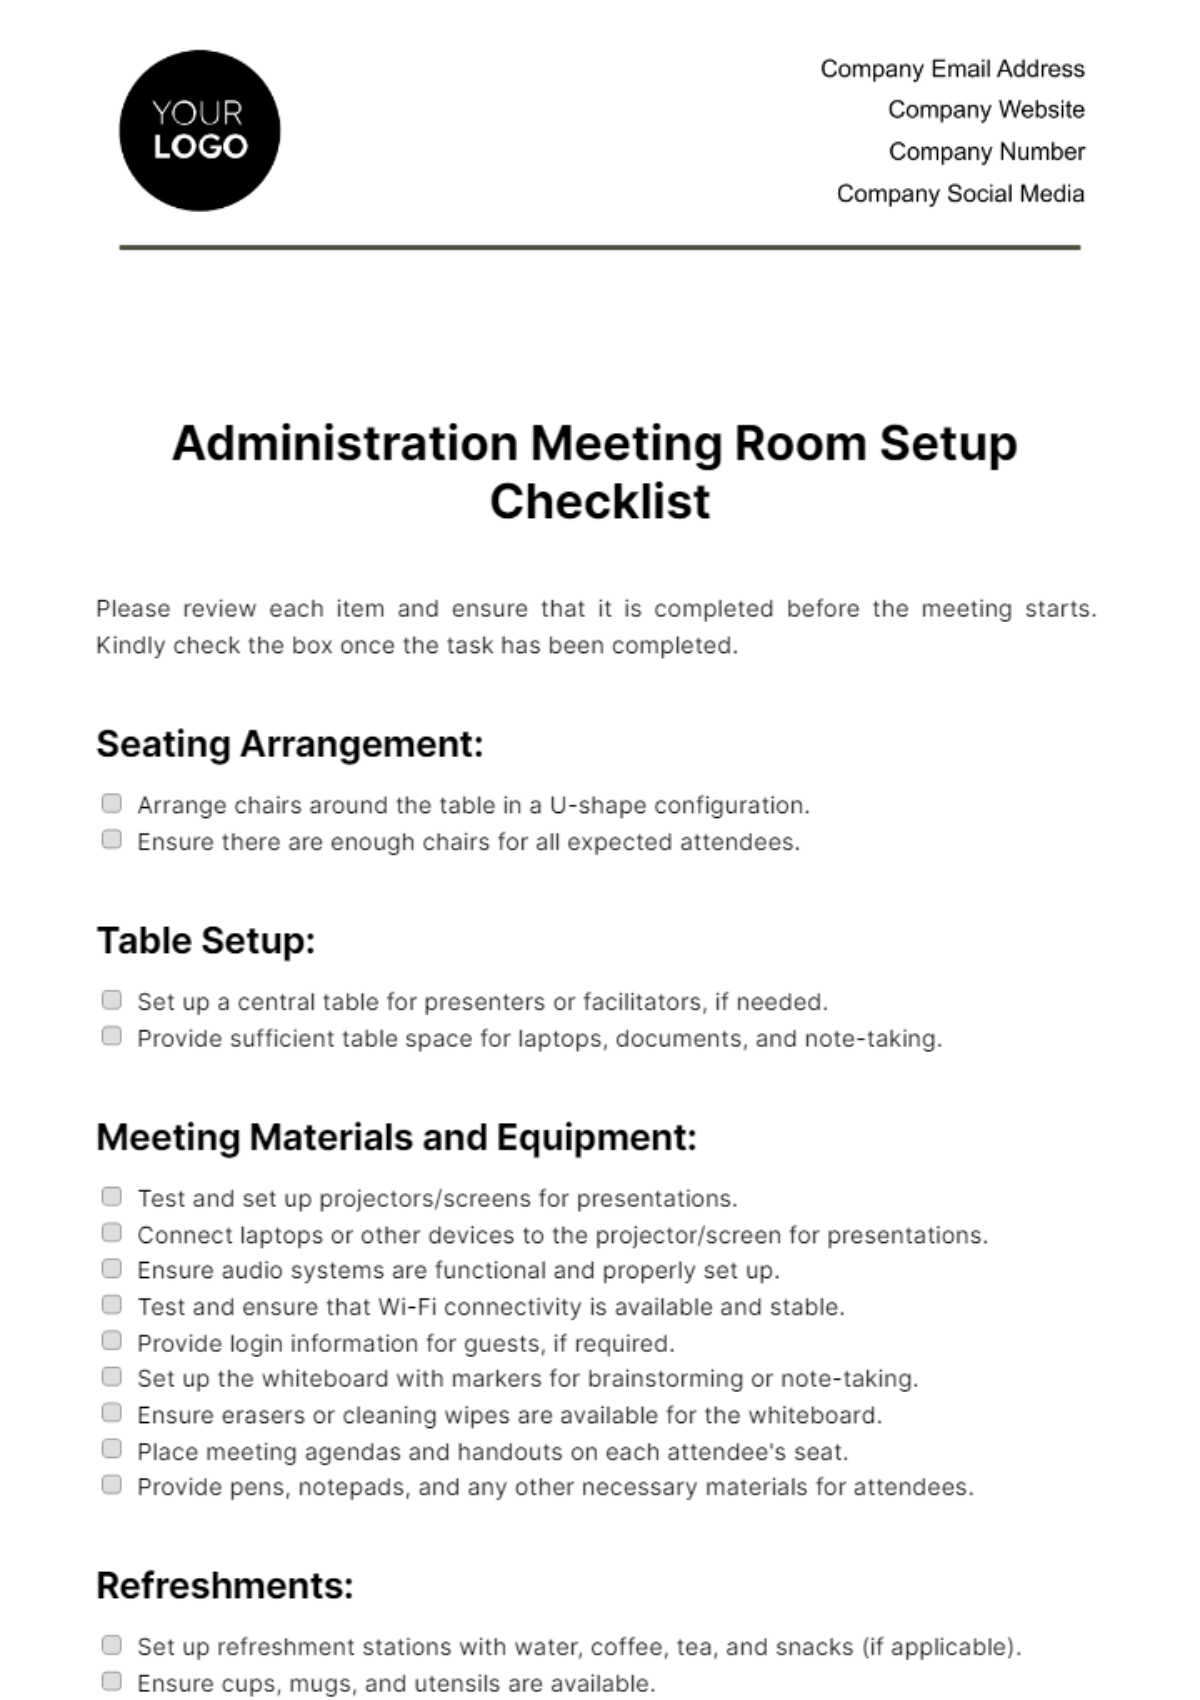 Administration Meeting Room Setup Checklist Template